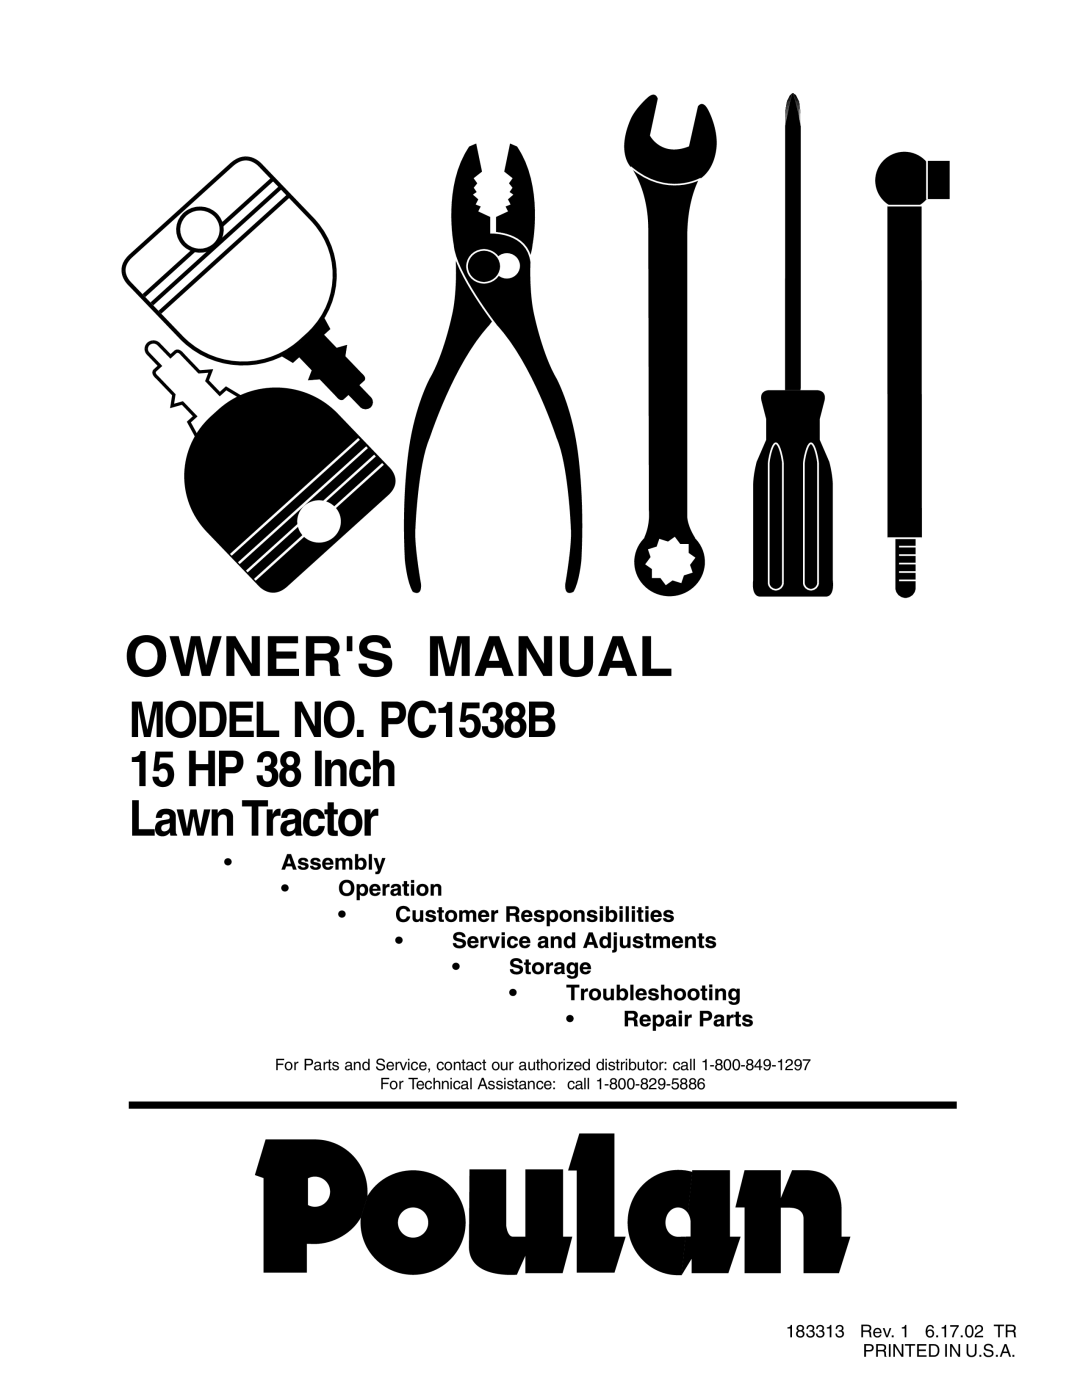 Poulan manual MODEL NO. PC1538B 15 HP 38 Inch Lawn Tractor 